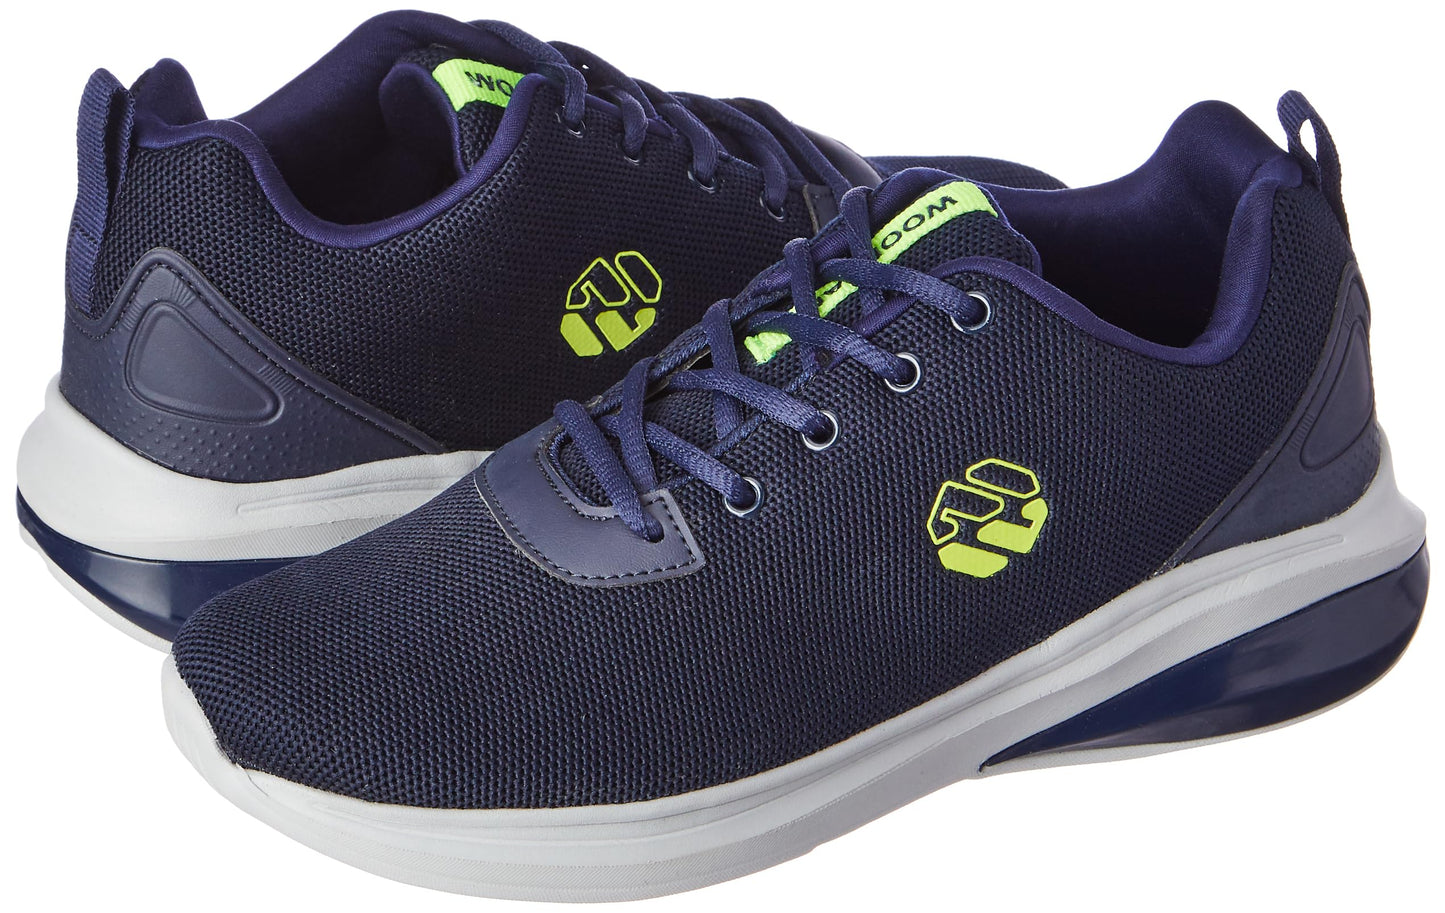 Woodland Men's Blue MESH Sports Shoes-6 UK (40 EU) (Navy)